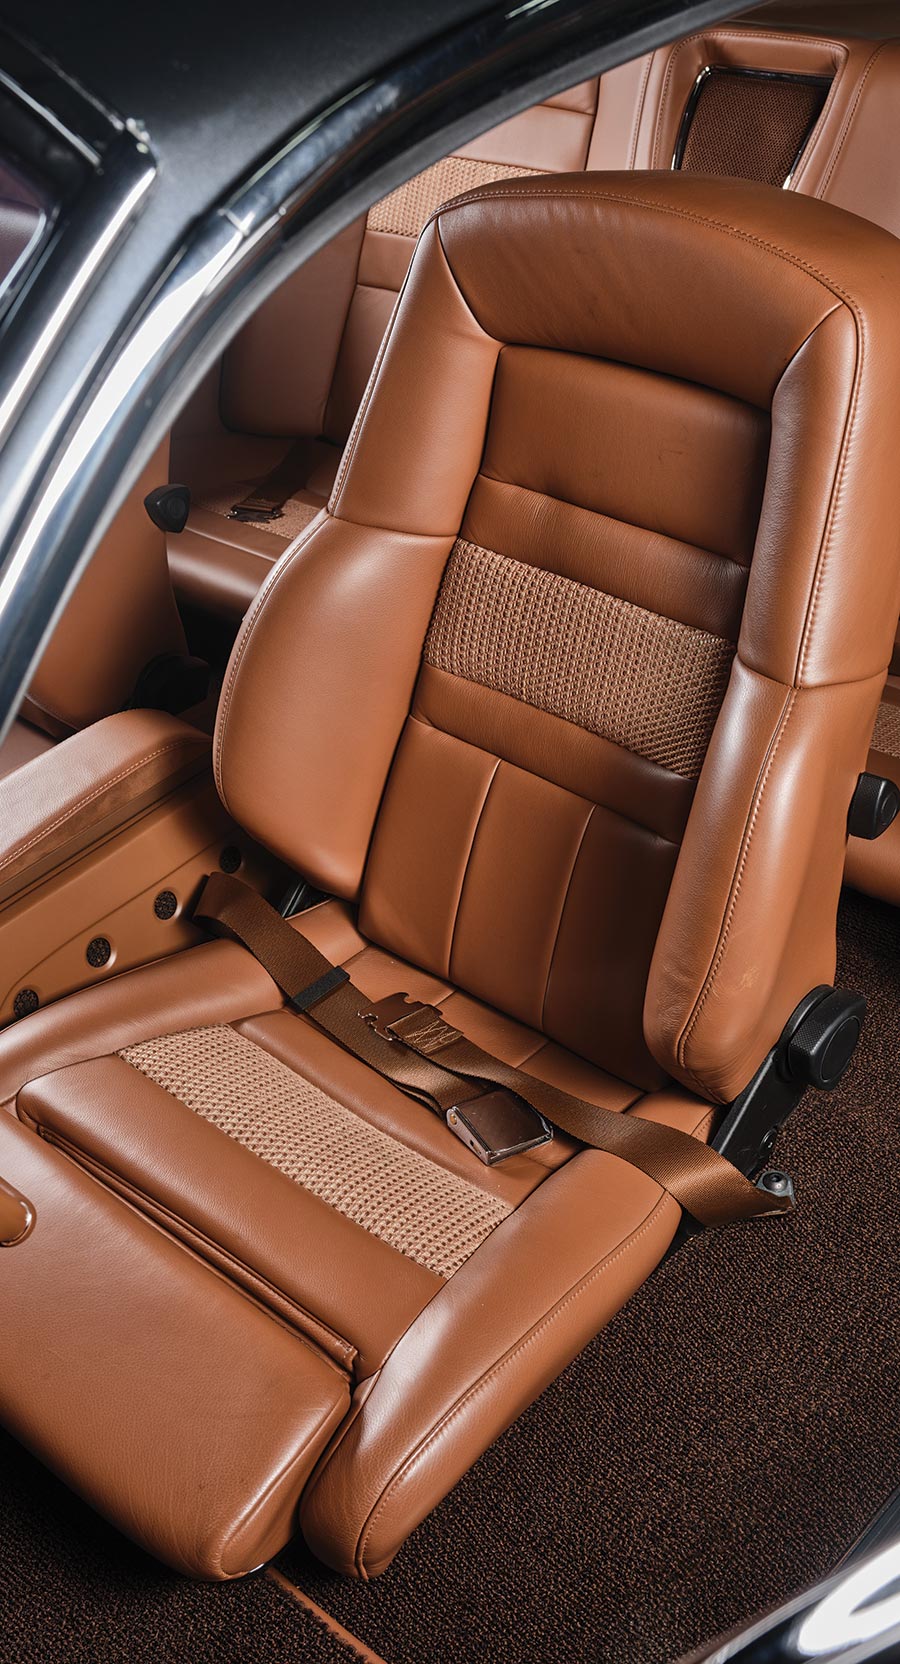 '61 Chevy Impala refurbished seat detailing